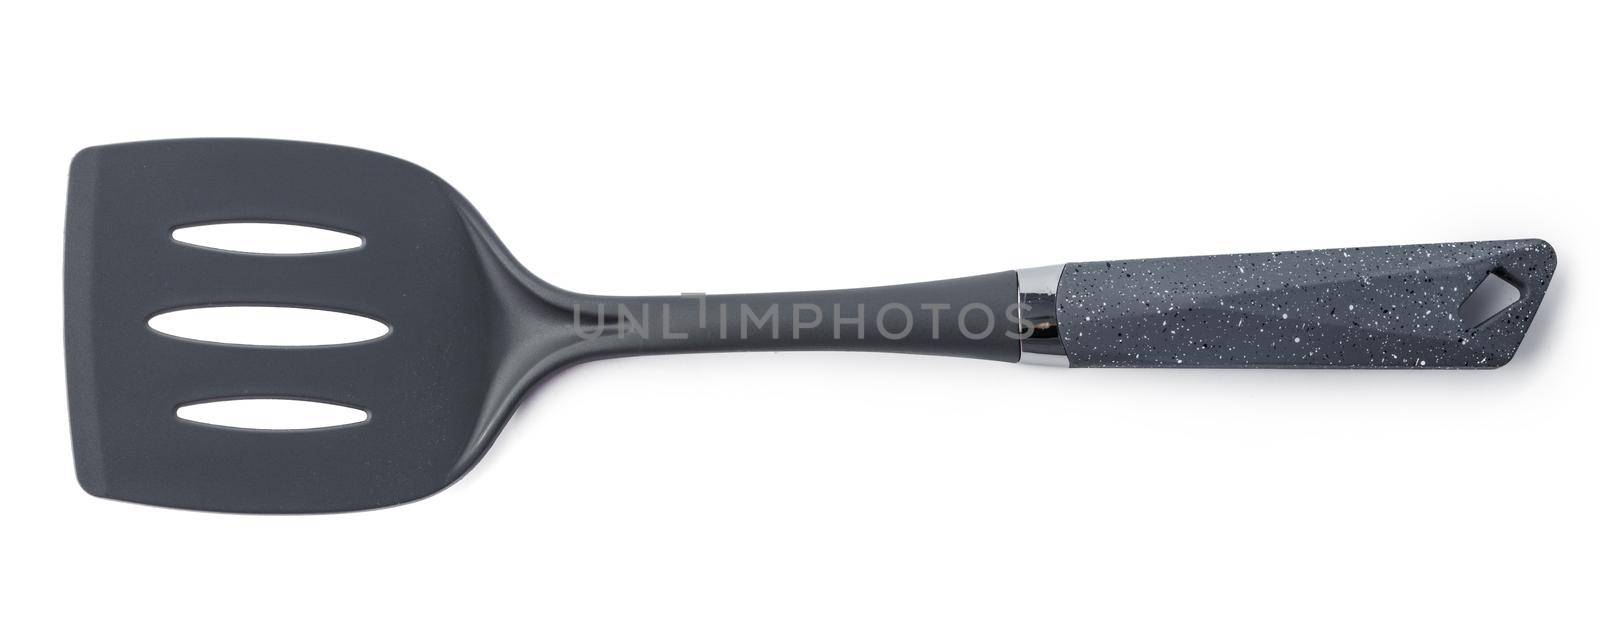 Plastic kitchen spatula utensil isolated on white by Fabrikasimf